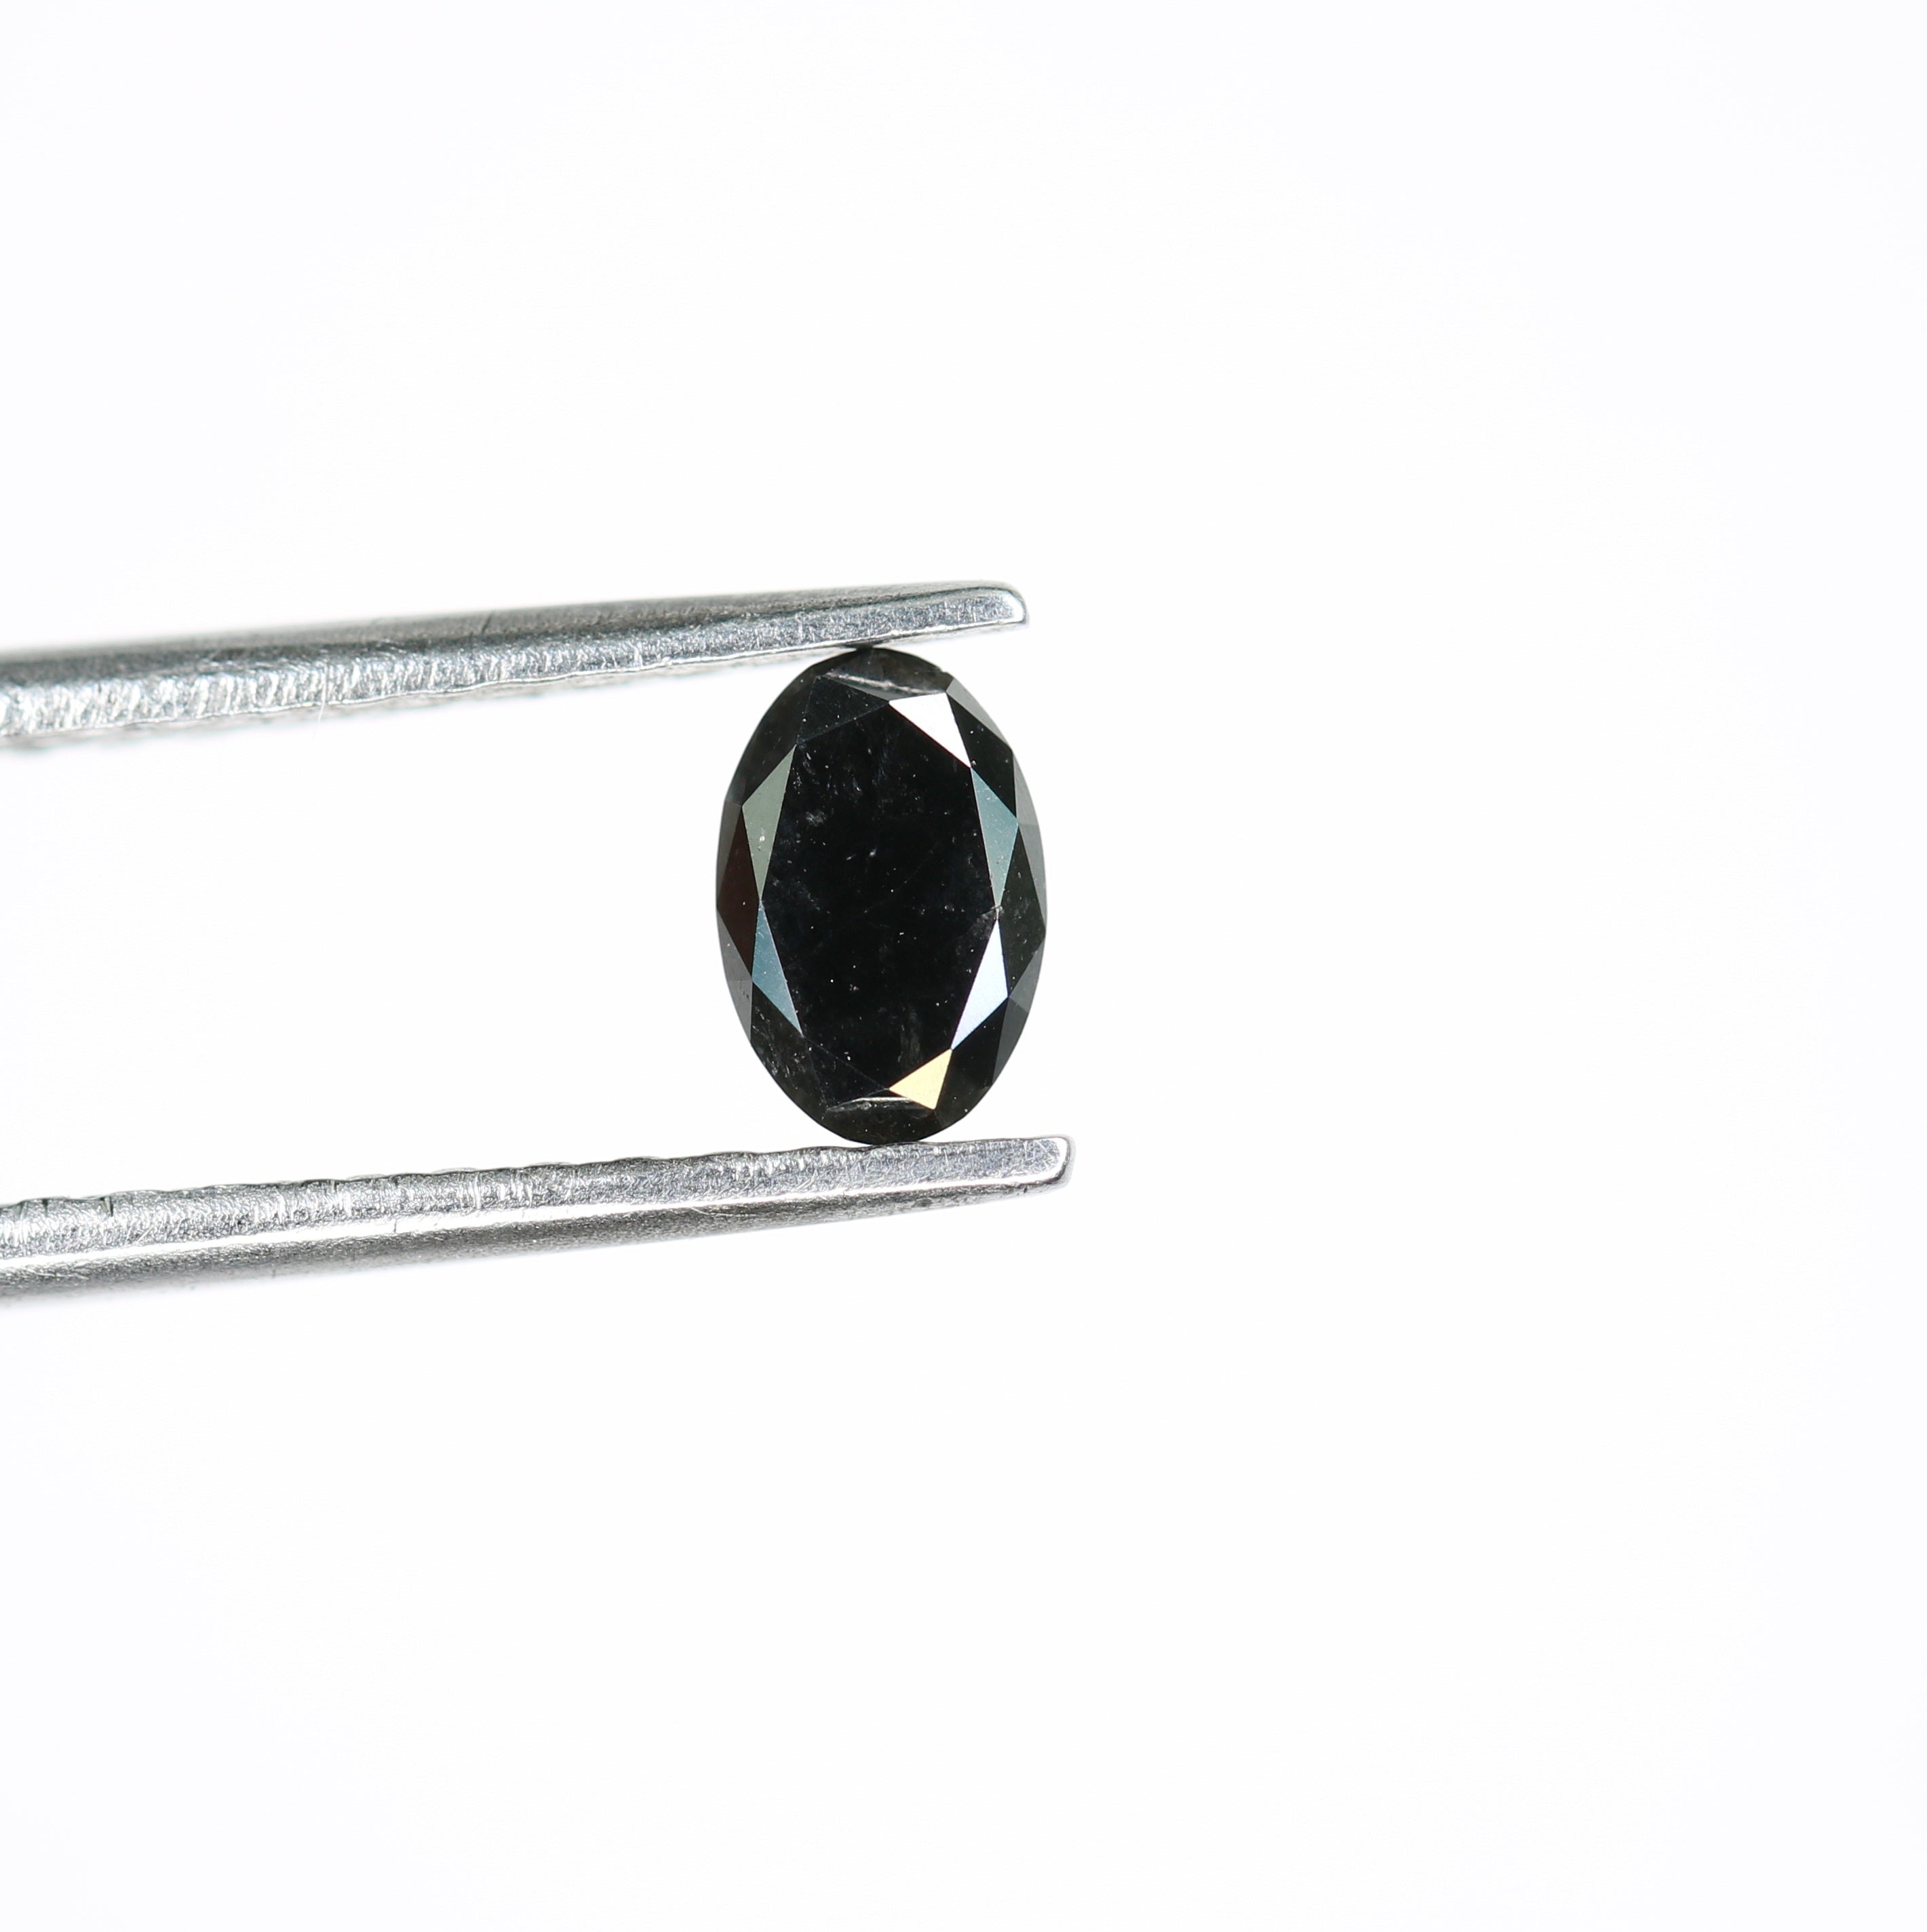 0.59 CT Black Oval Brilliant Cut Diamond For Anniversary Gift Ring